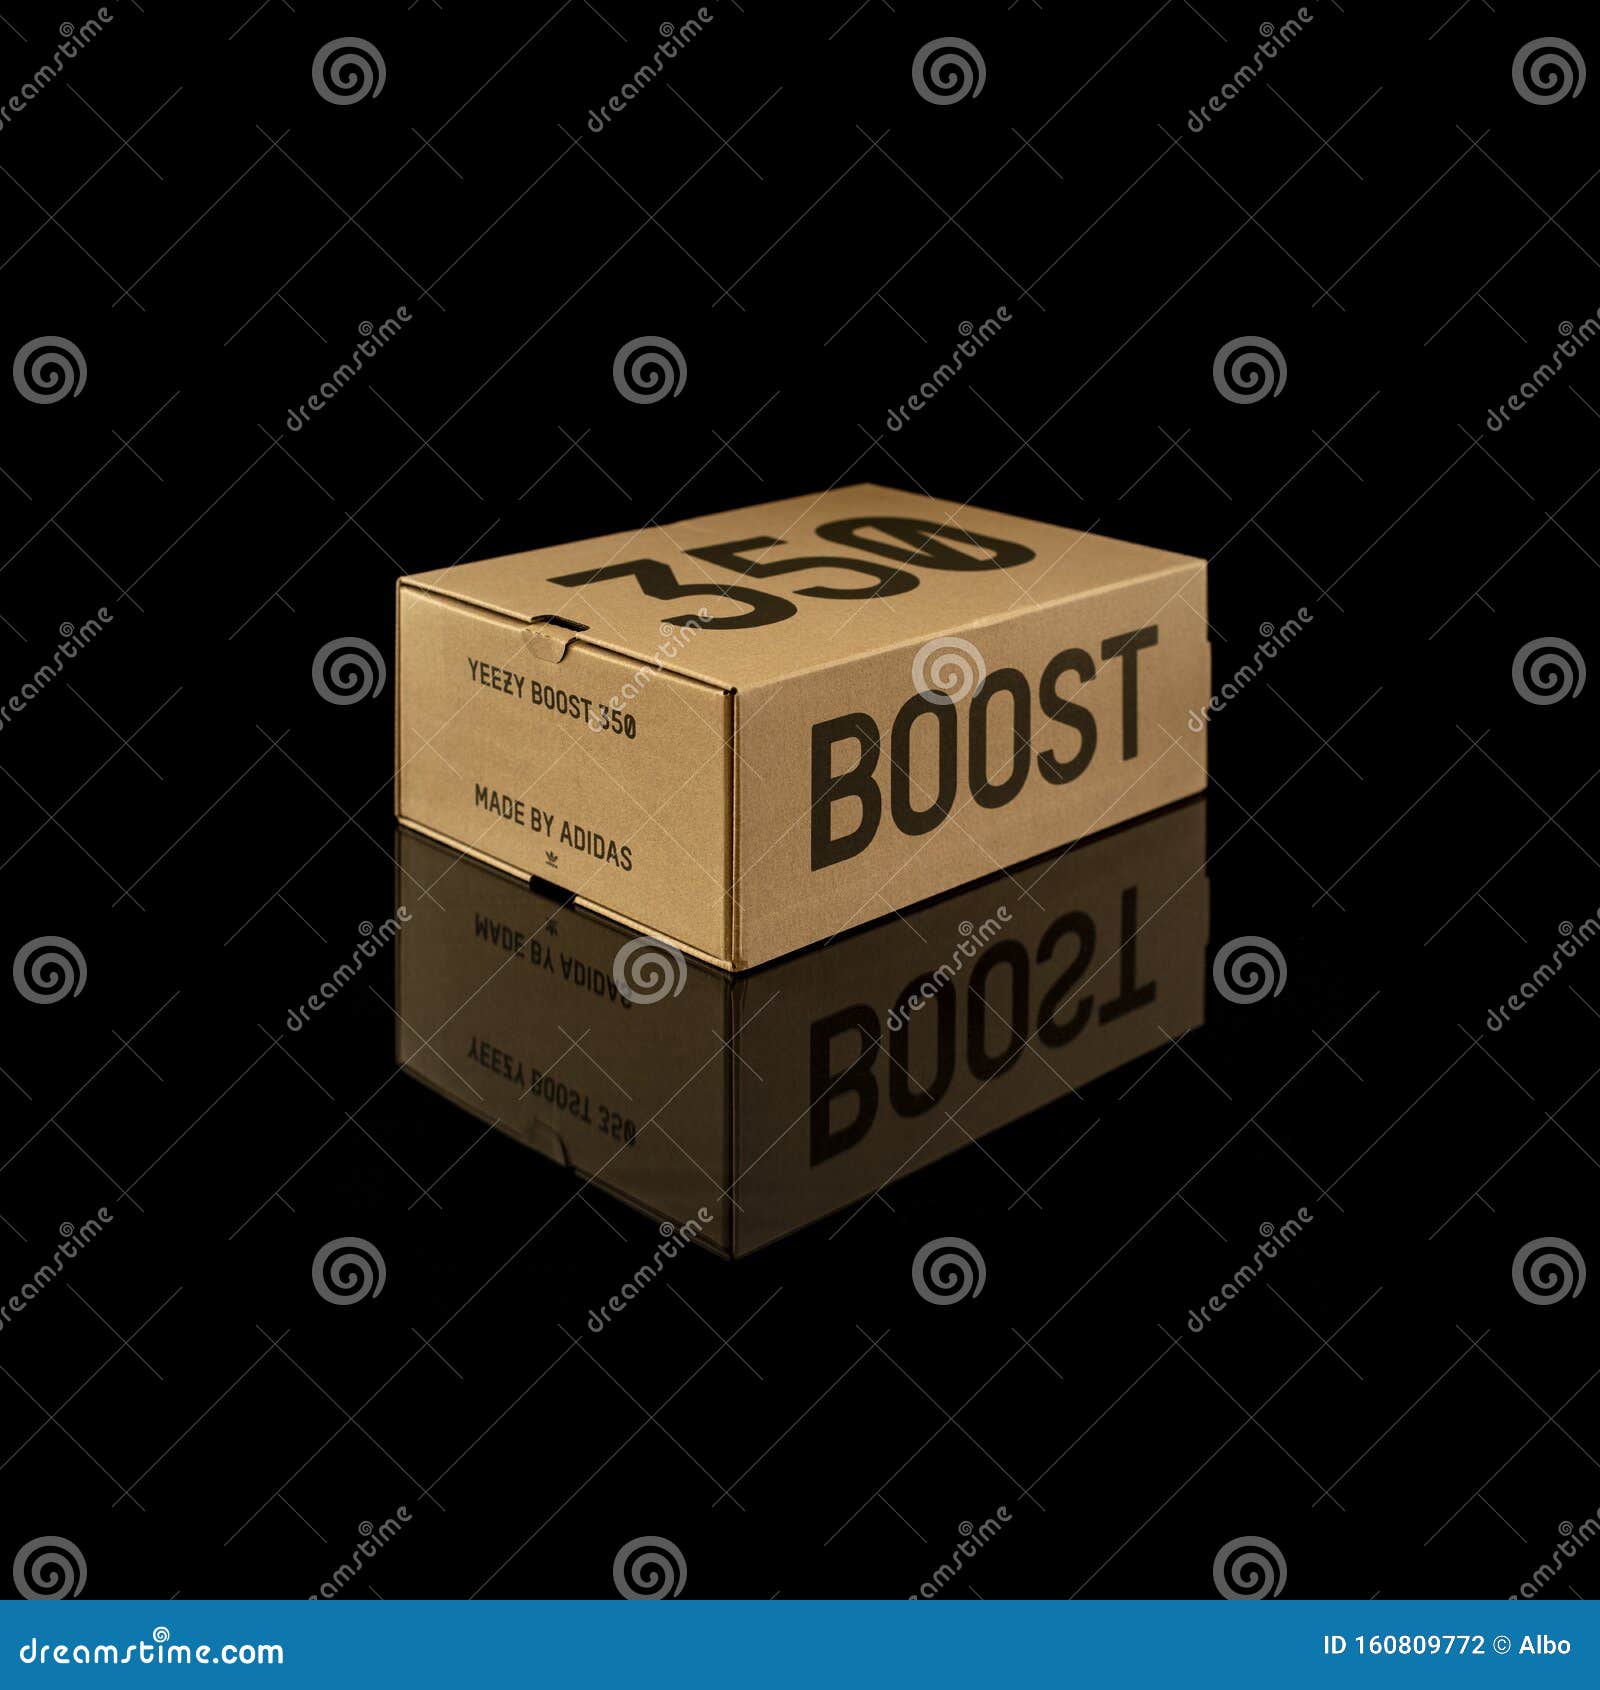 adidas yeezy boost 350 v2 box